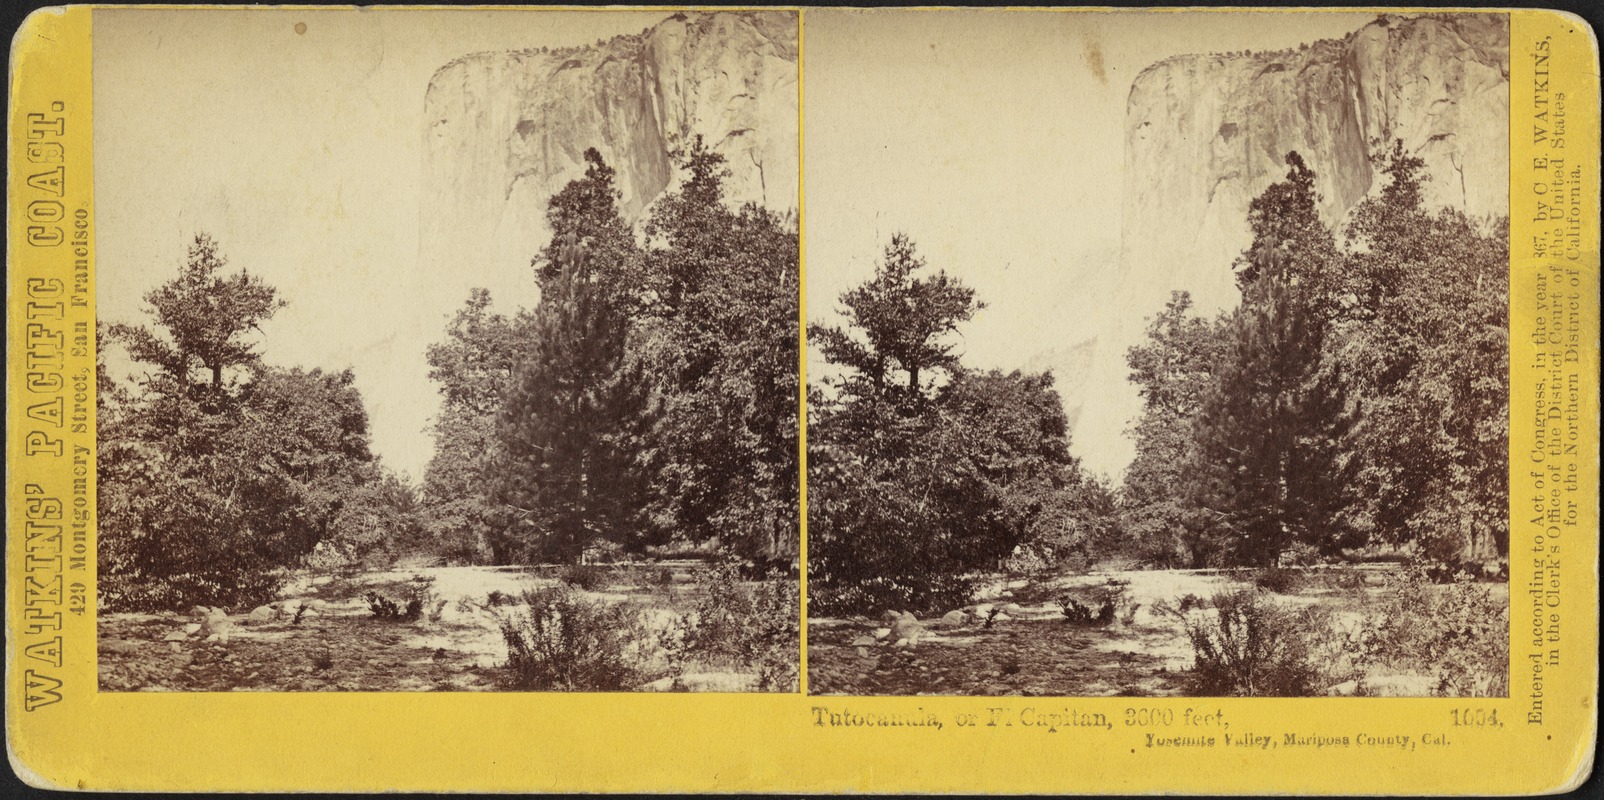 Tutocanula, or El Capitan, 3600 feet, Yosemite Valley, Mariposa County, Cal.